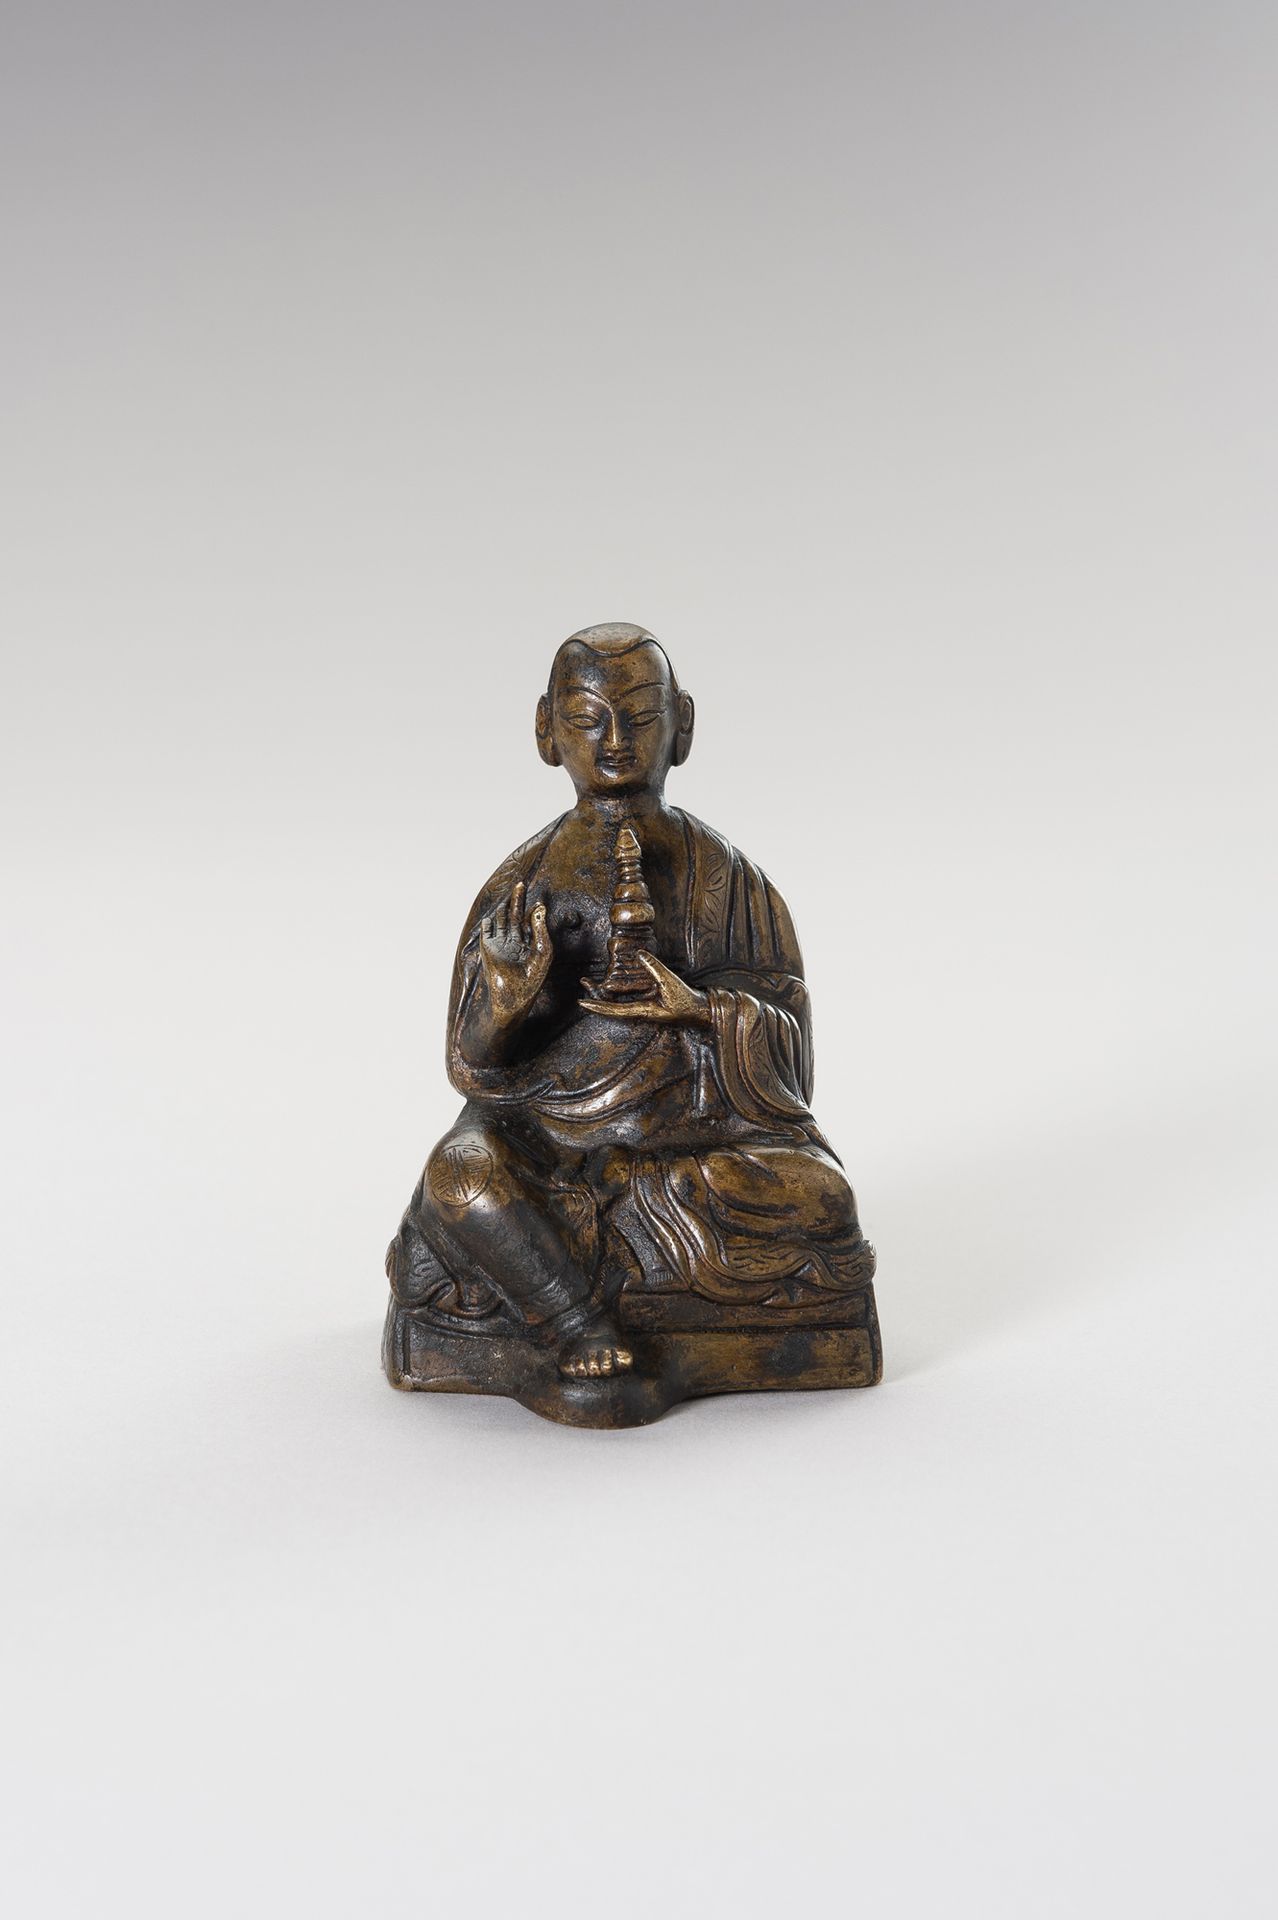 A Bronze figure of a Lama A BRONZE FIGURE OF A LAMA
Tibet, 19th century. Seated &hellip;